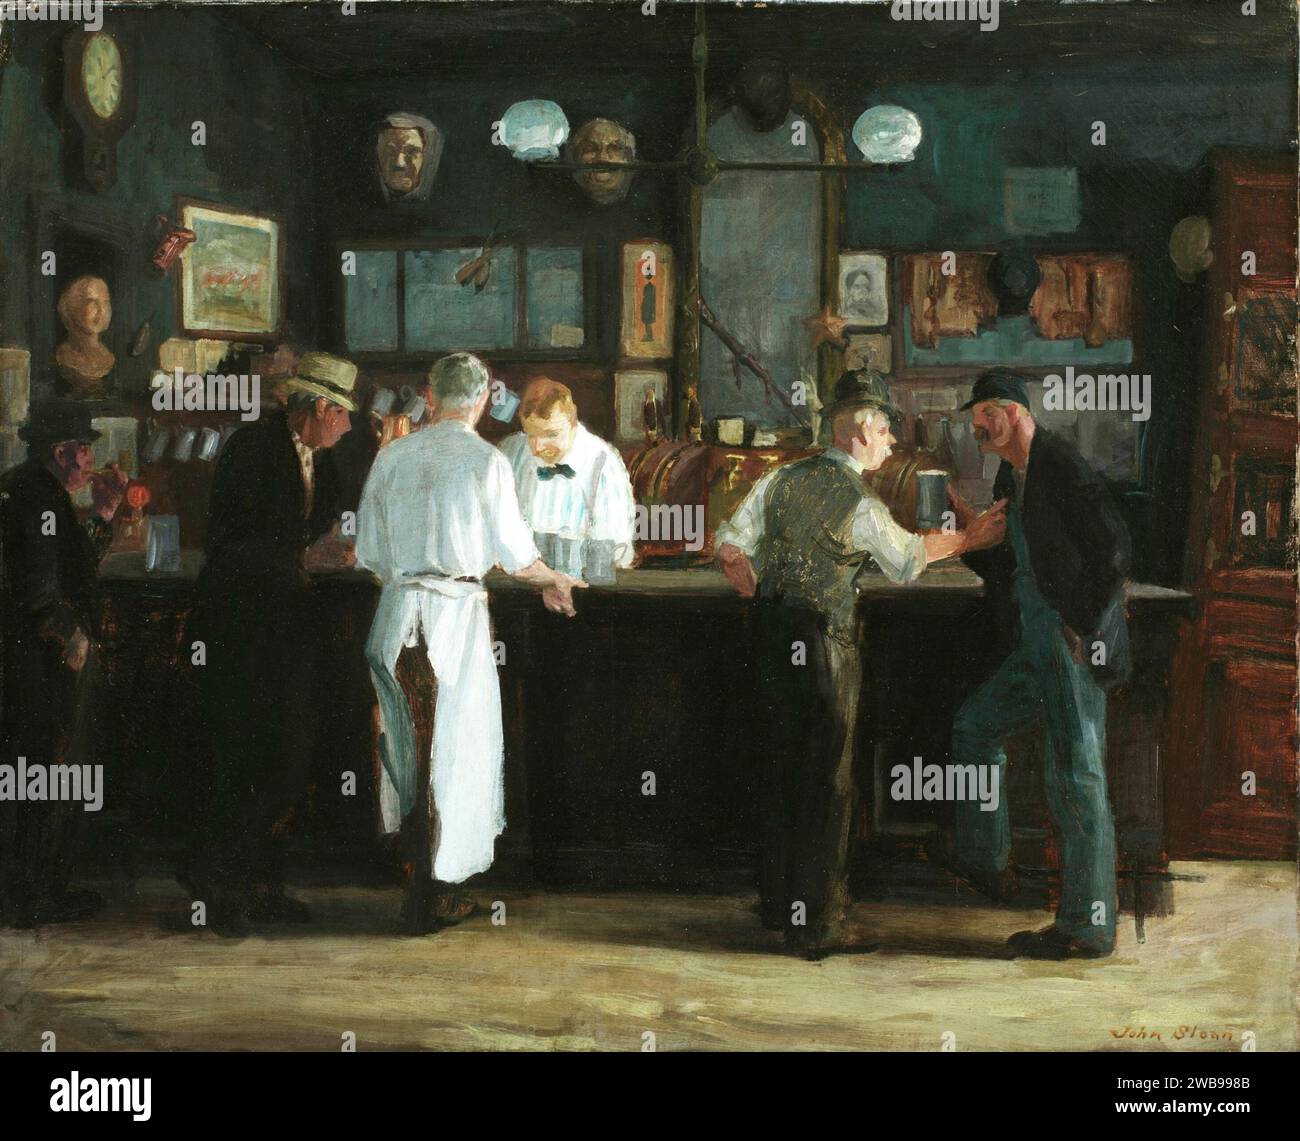 John Sloan - McSorley's Bar - 1912 Stockfoto